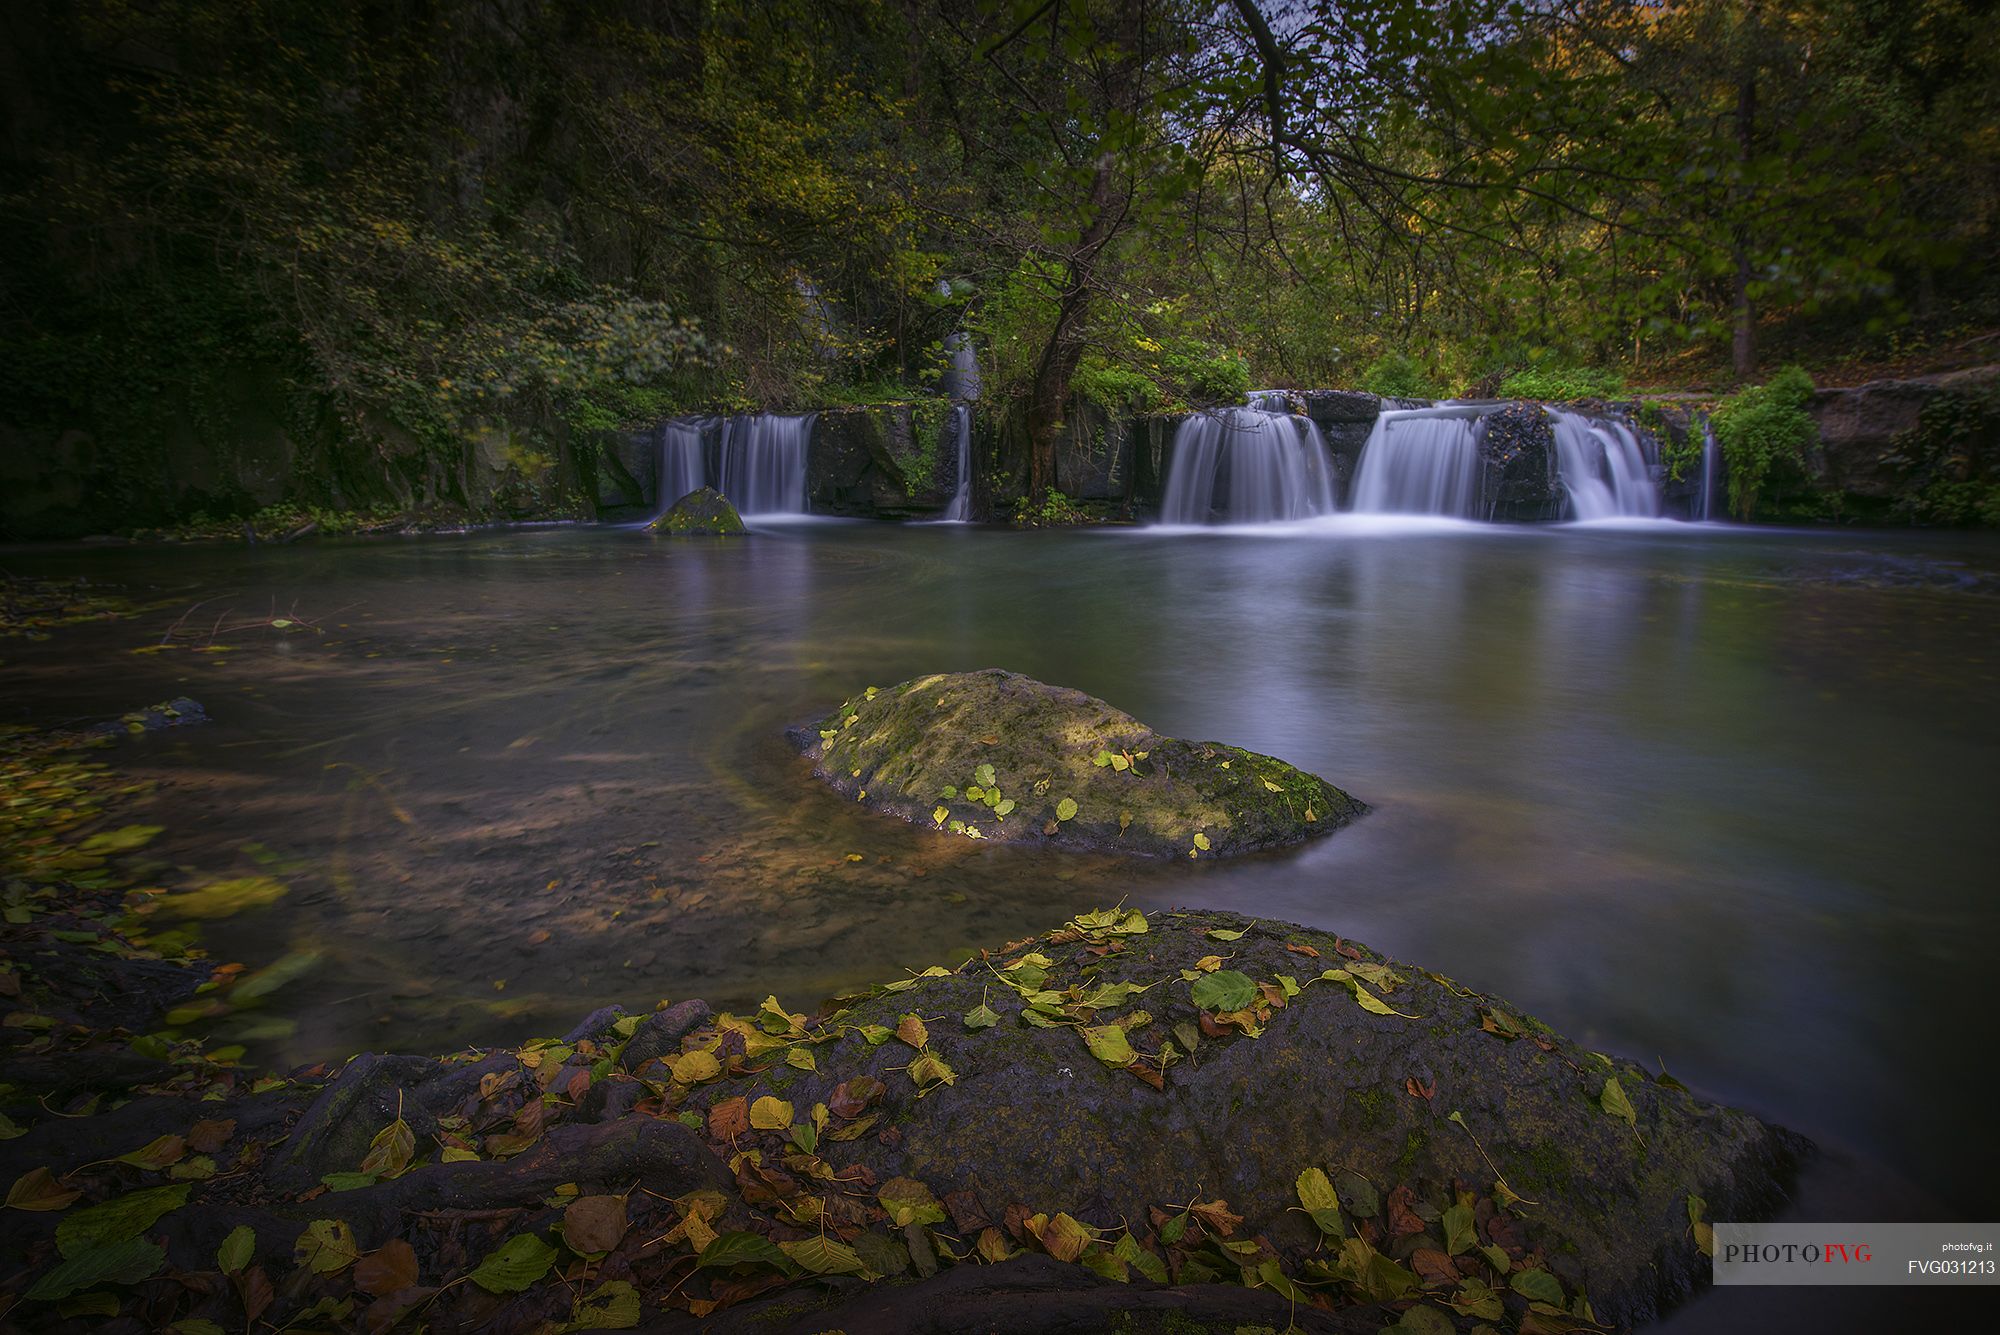 Little waterfall in the Treja Valley Regional Park, near Rome, Latium, Italy